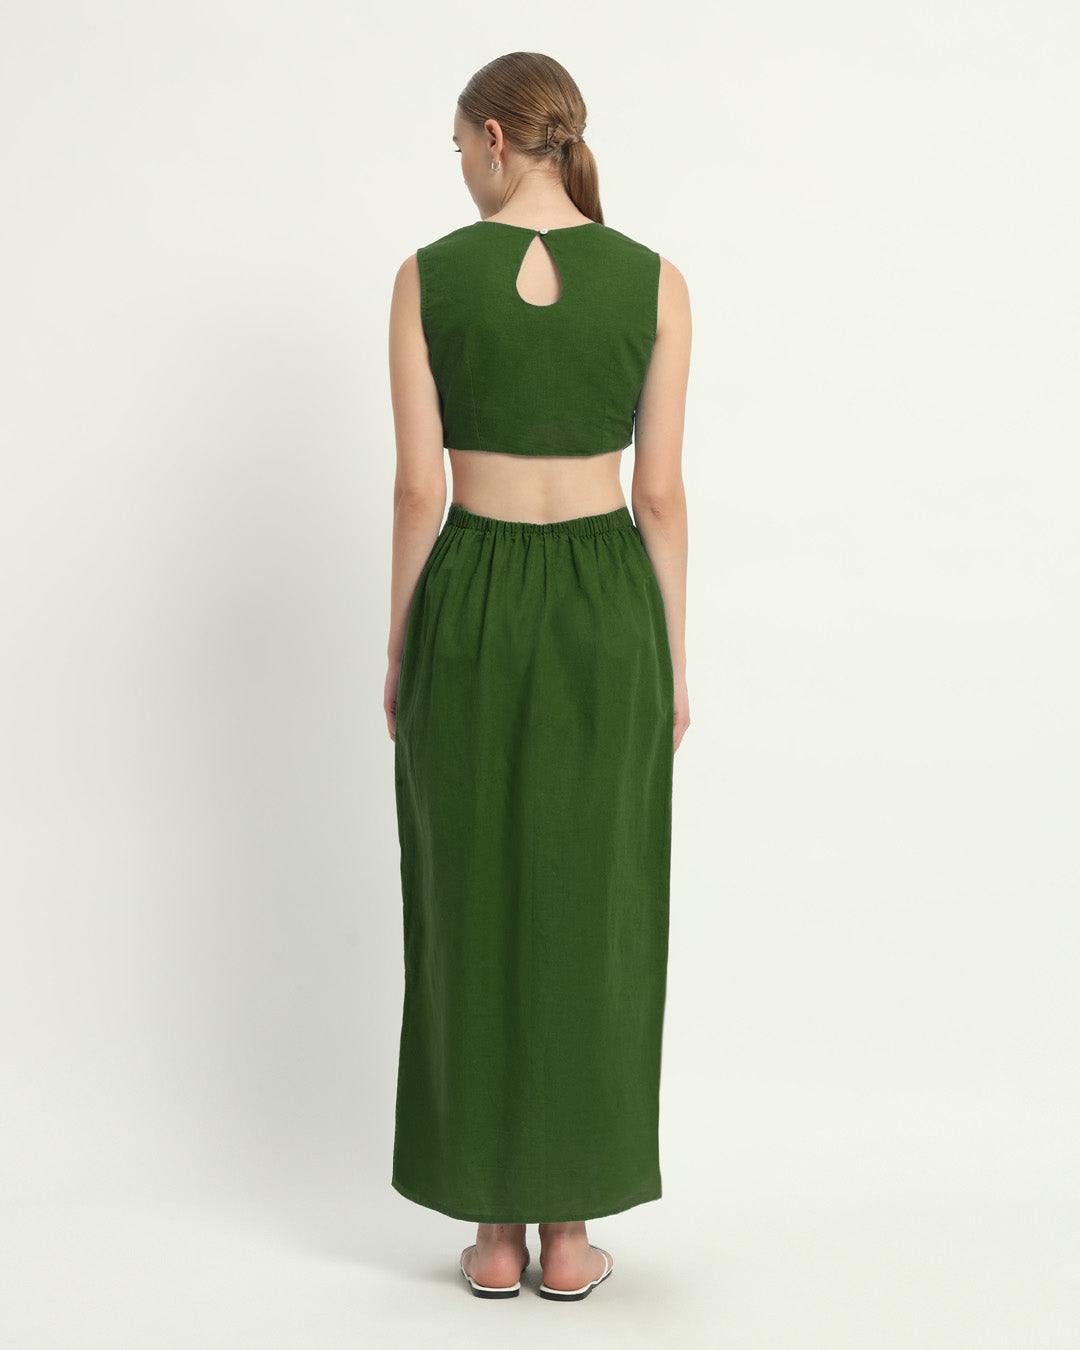 The Livingston Emerald Cotton Dress